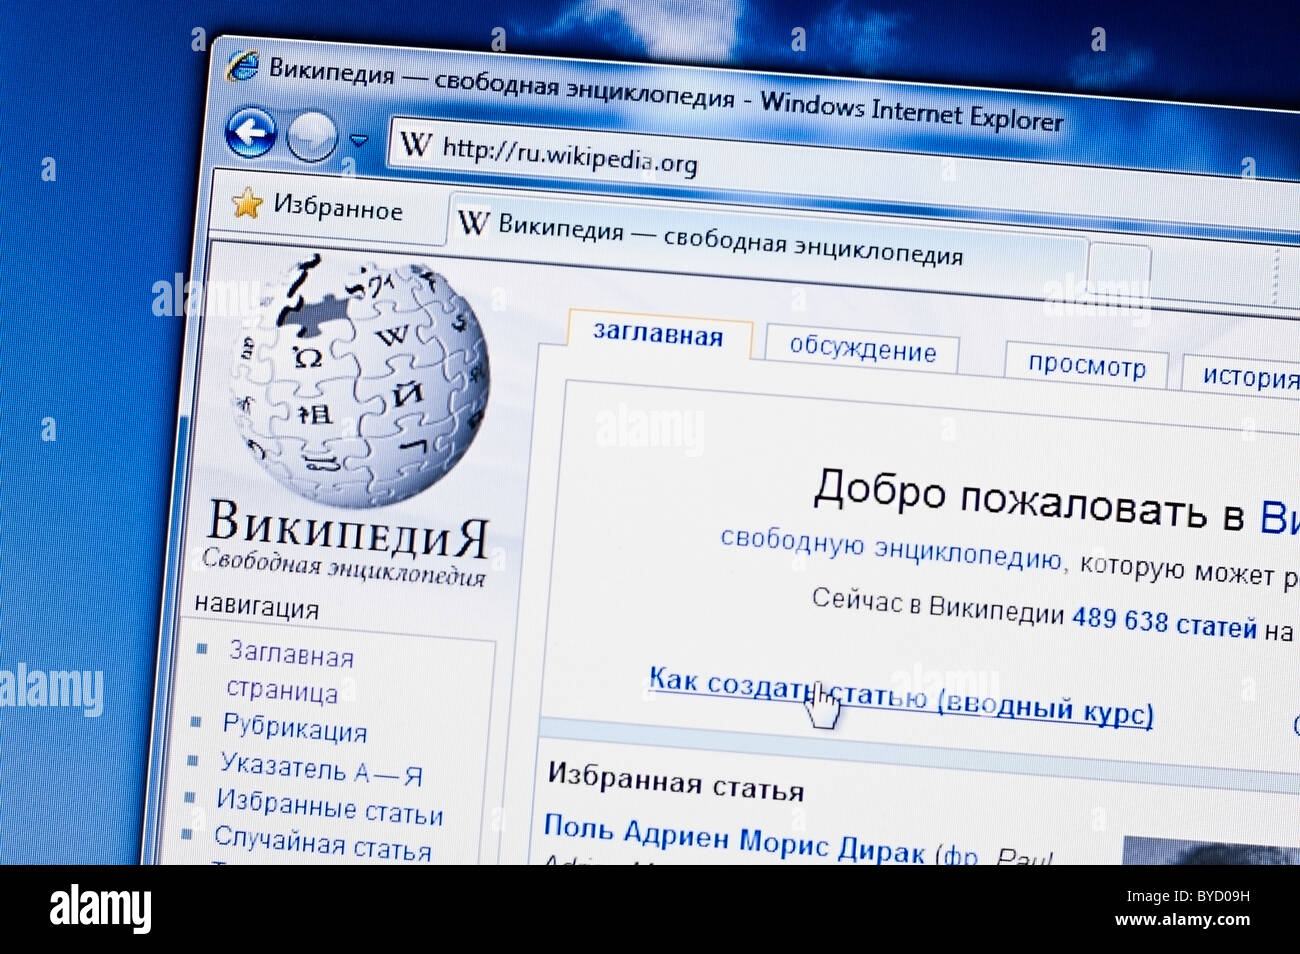 Https ru wikipedia org w. Википедия. Интернет энциклопедия это. Википедия энциклопедия. Wiki.